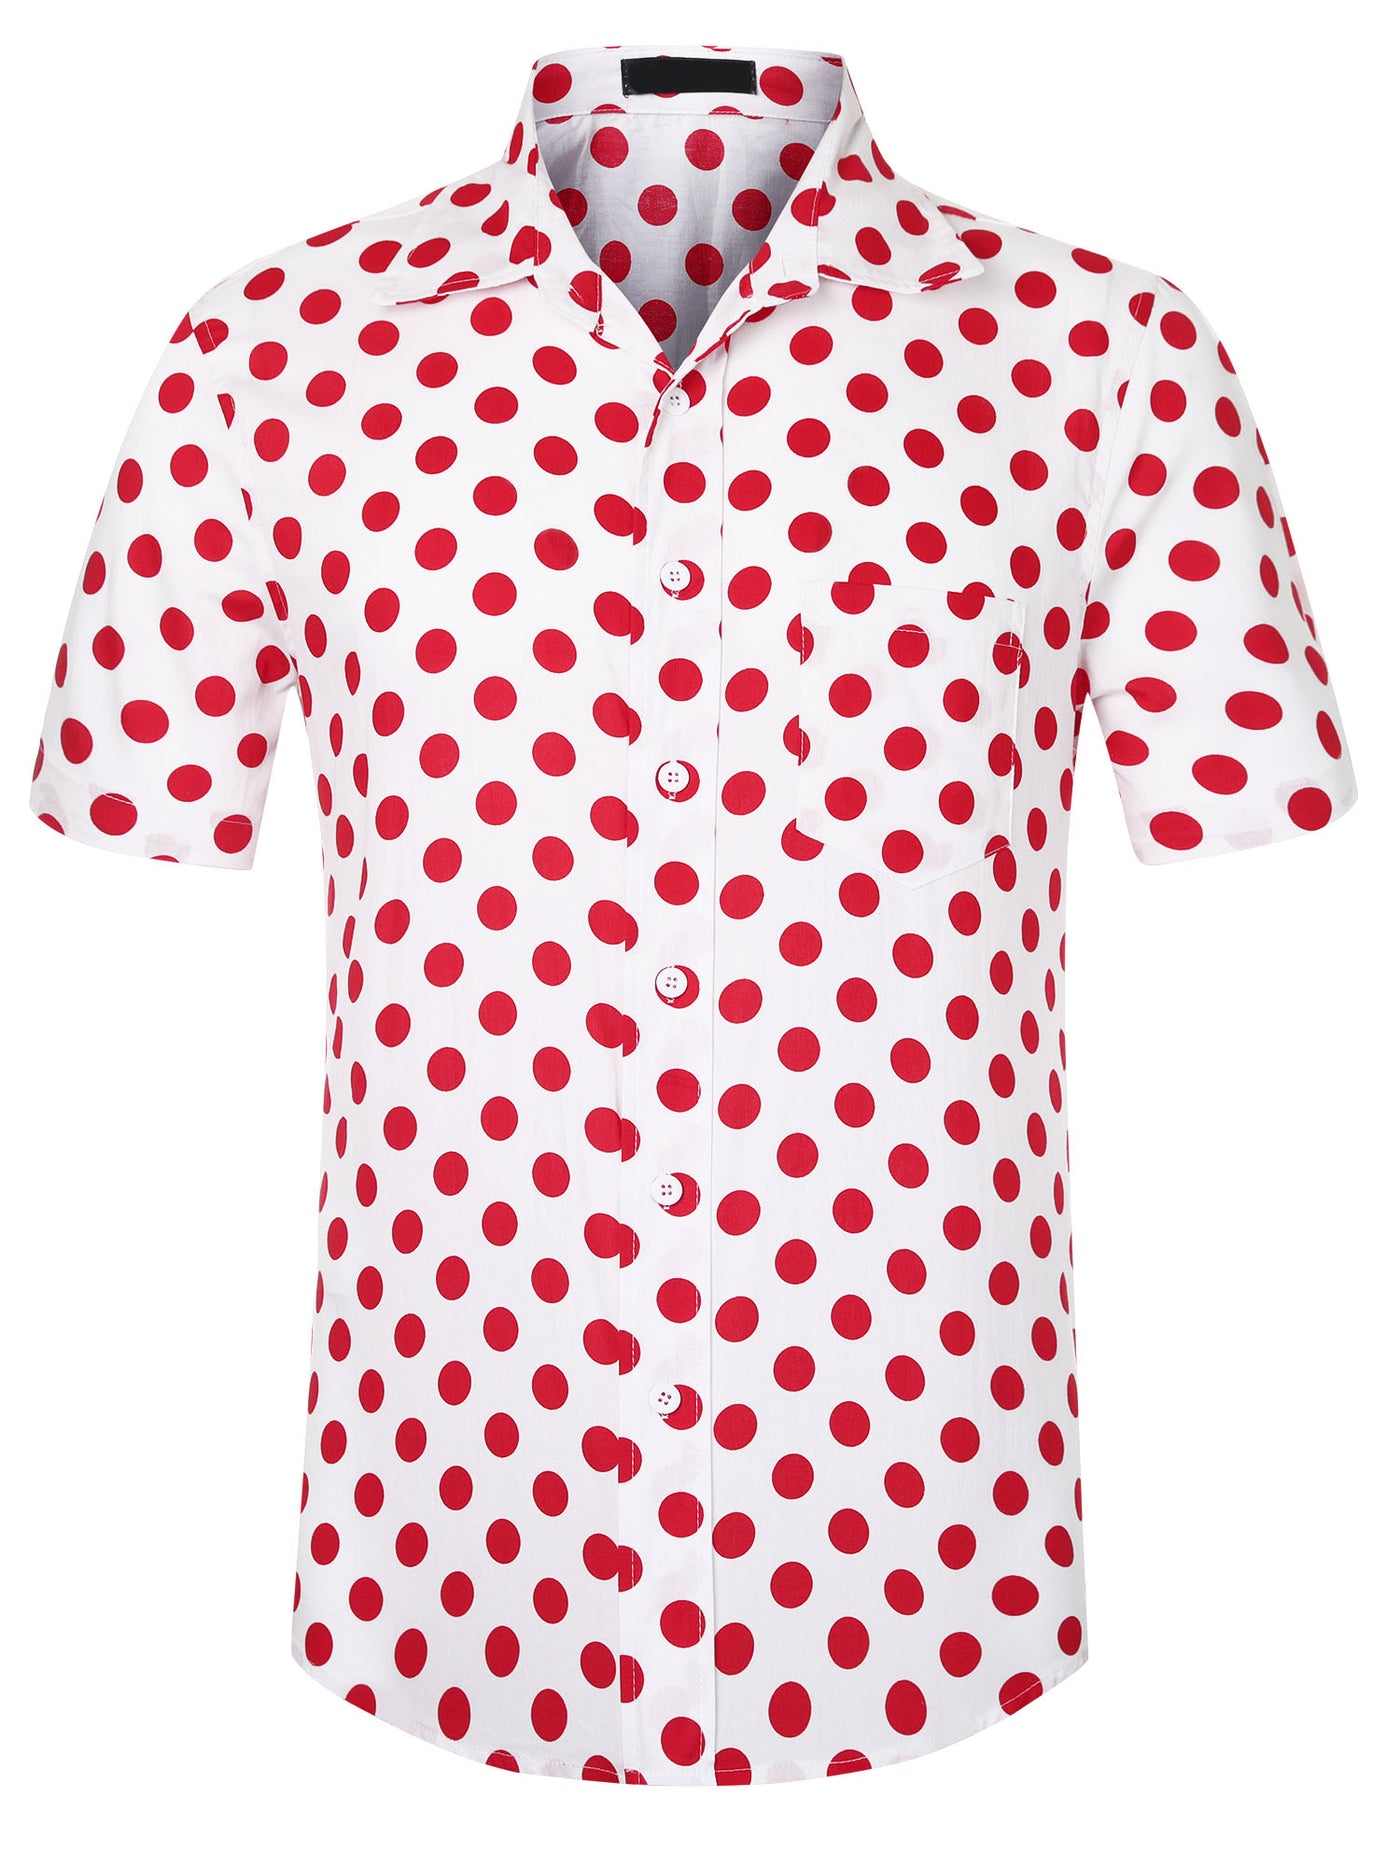 Bublédon Men's Slim Fit Polka Dots Button Short Sleeves Dress Shirts